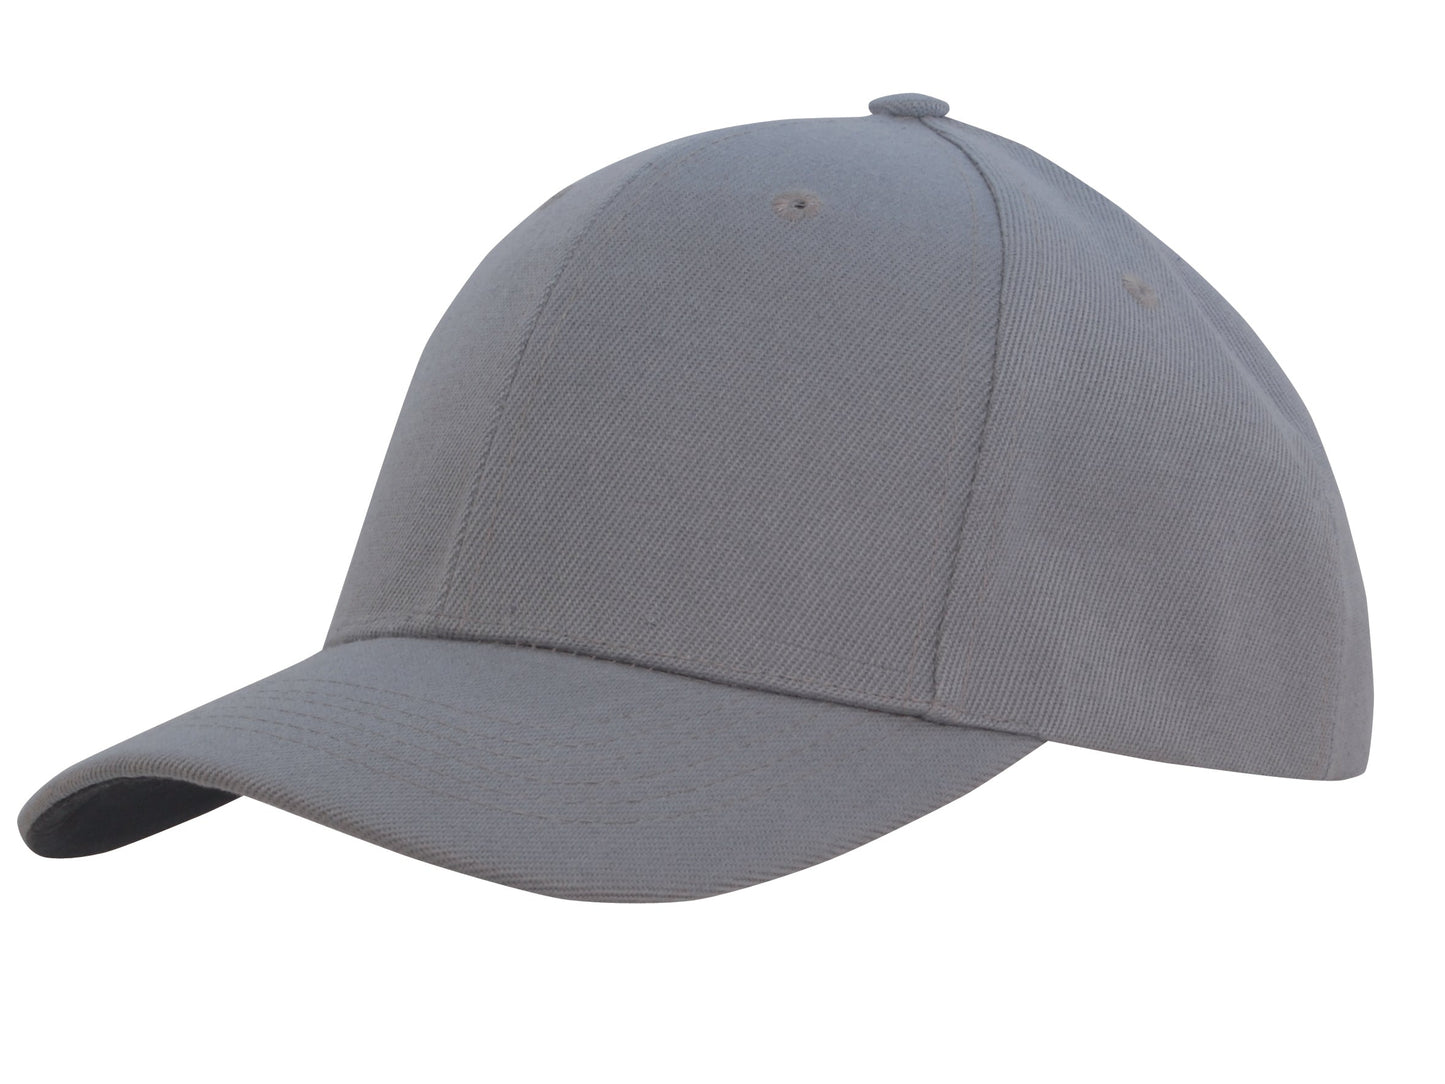 Headwear Prem American Twill Contrast  X12 - 3920 Cap Headwear Professionals Grey/Charcoal One Size 